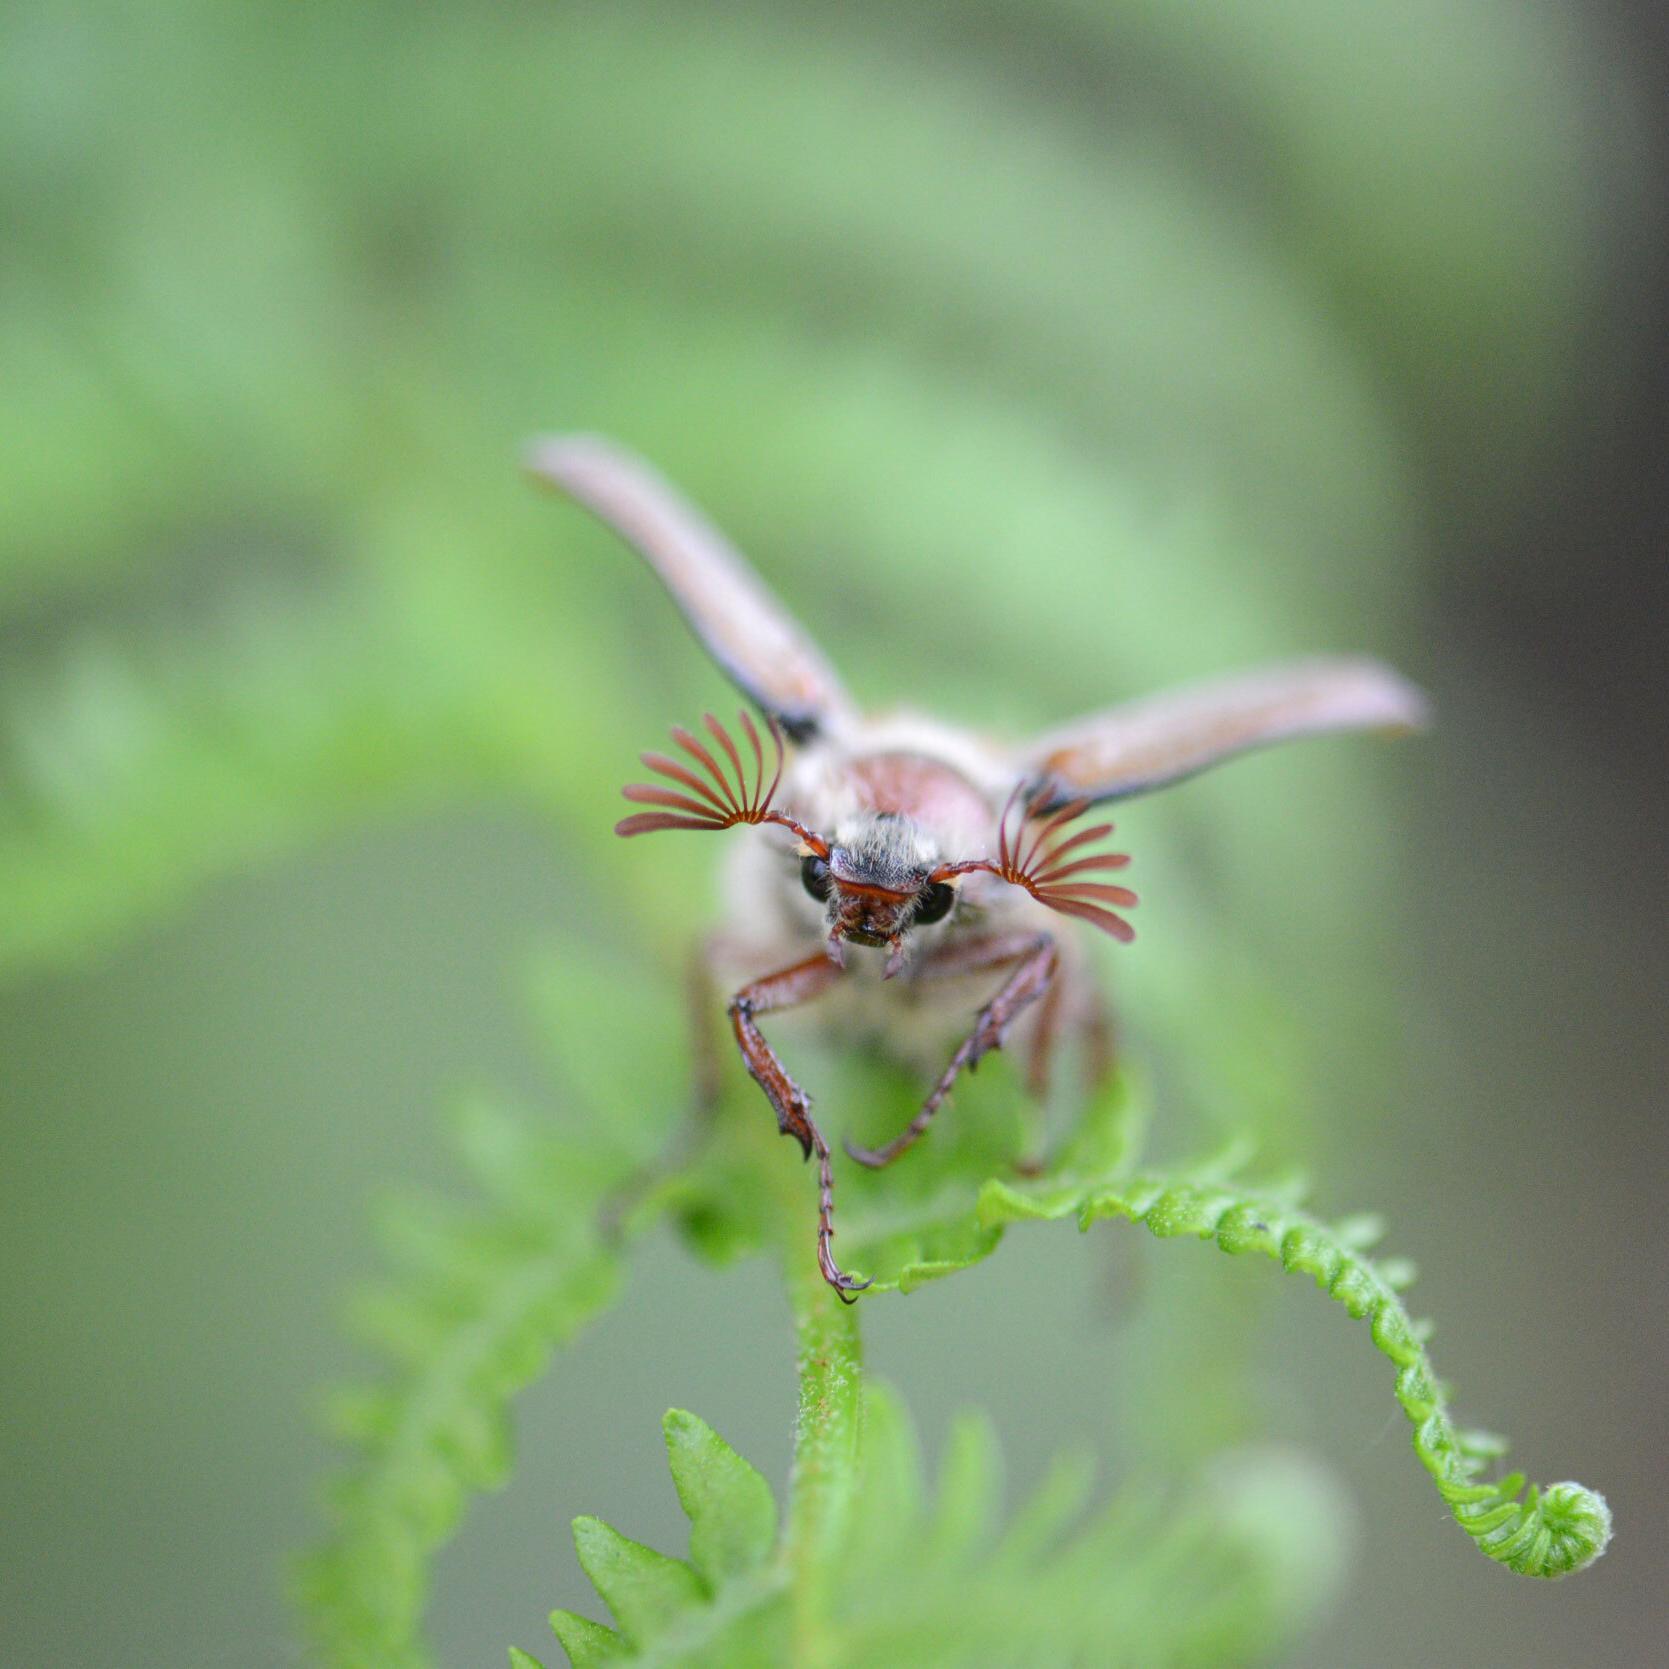 A cockchafer in flight head-on over a fern leaf